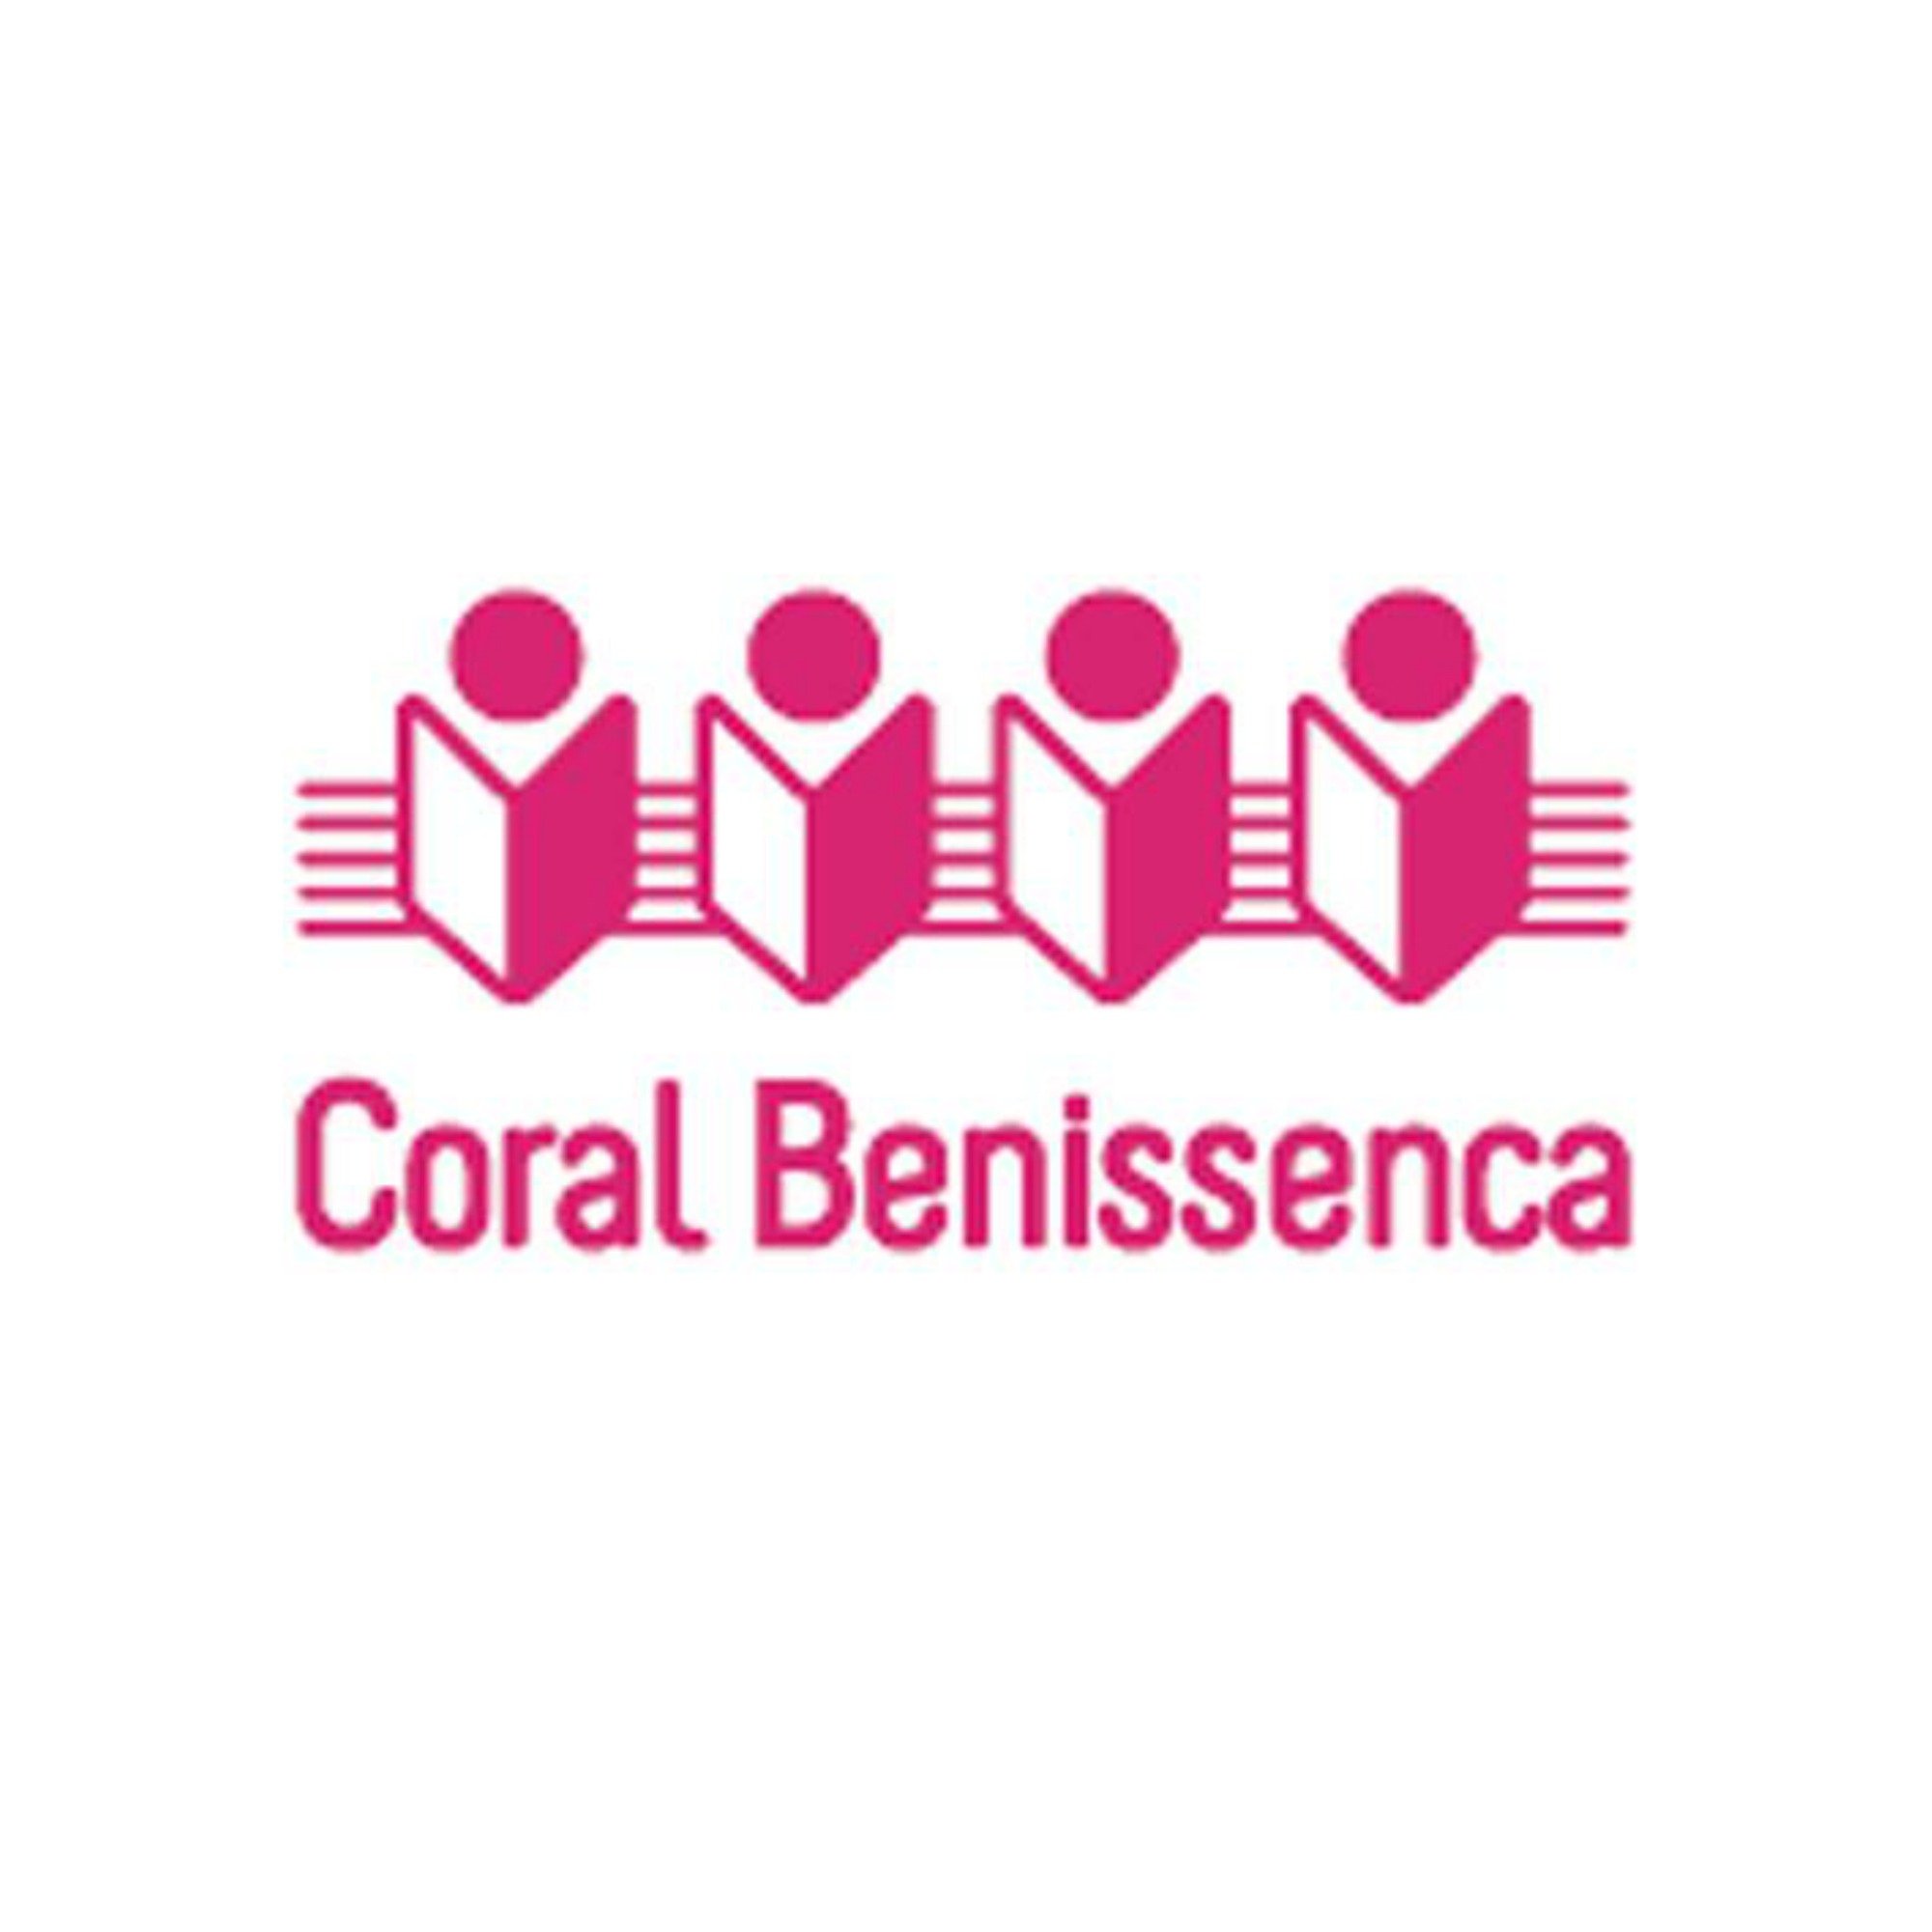 Coral Benissenca